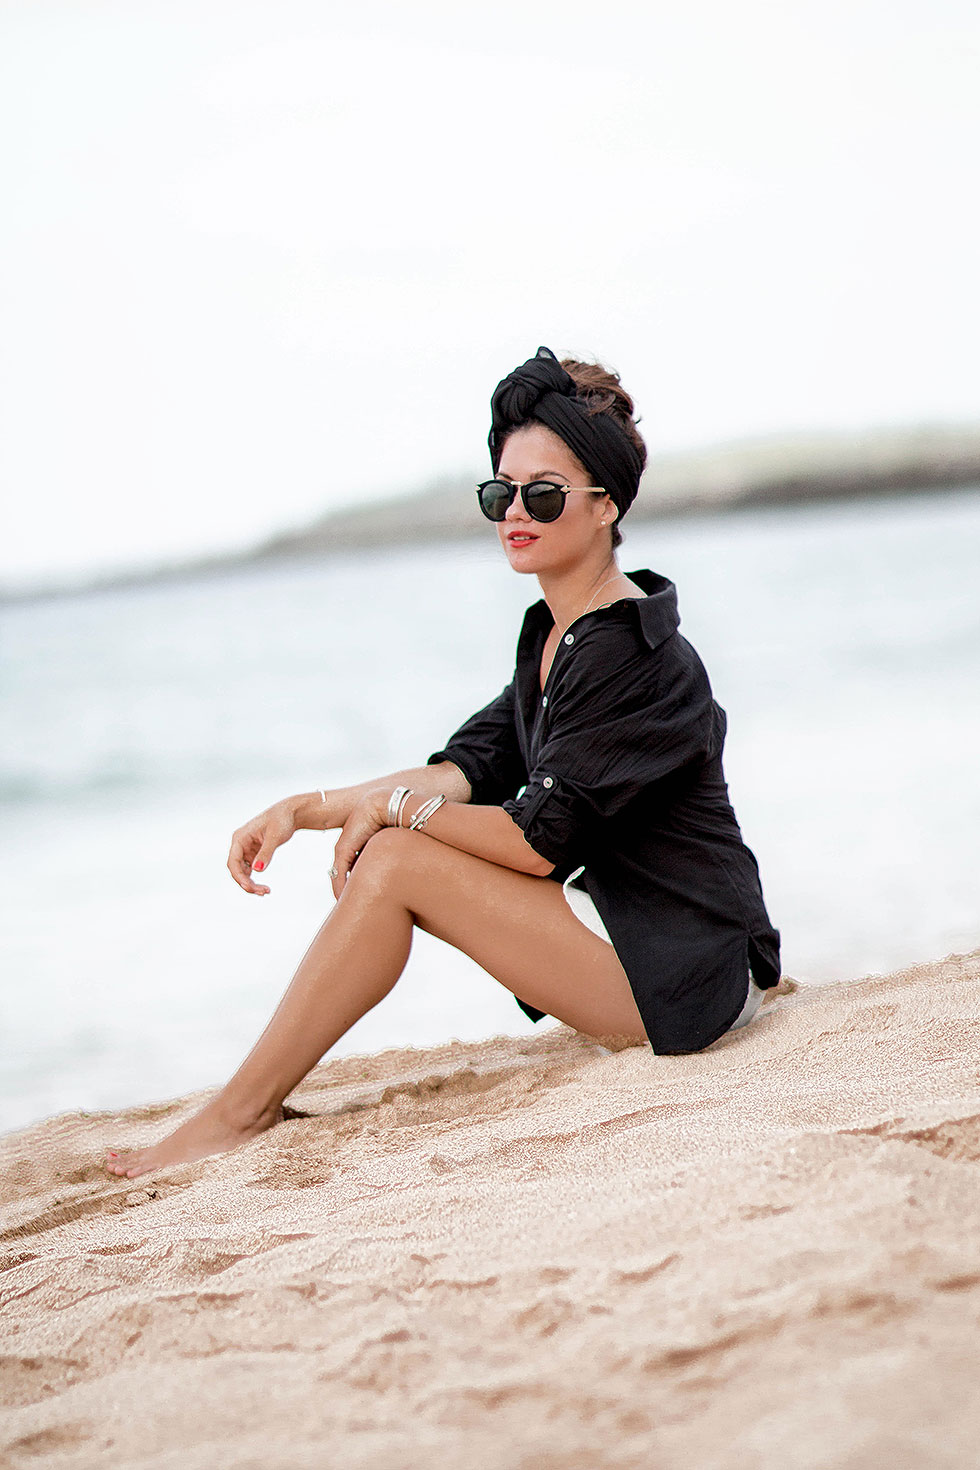 Tommy Bahama Boyfriend Shirt Cover-Up Beach Outfit Maui, Hawaii